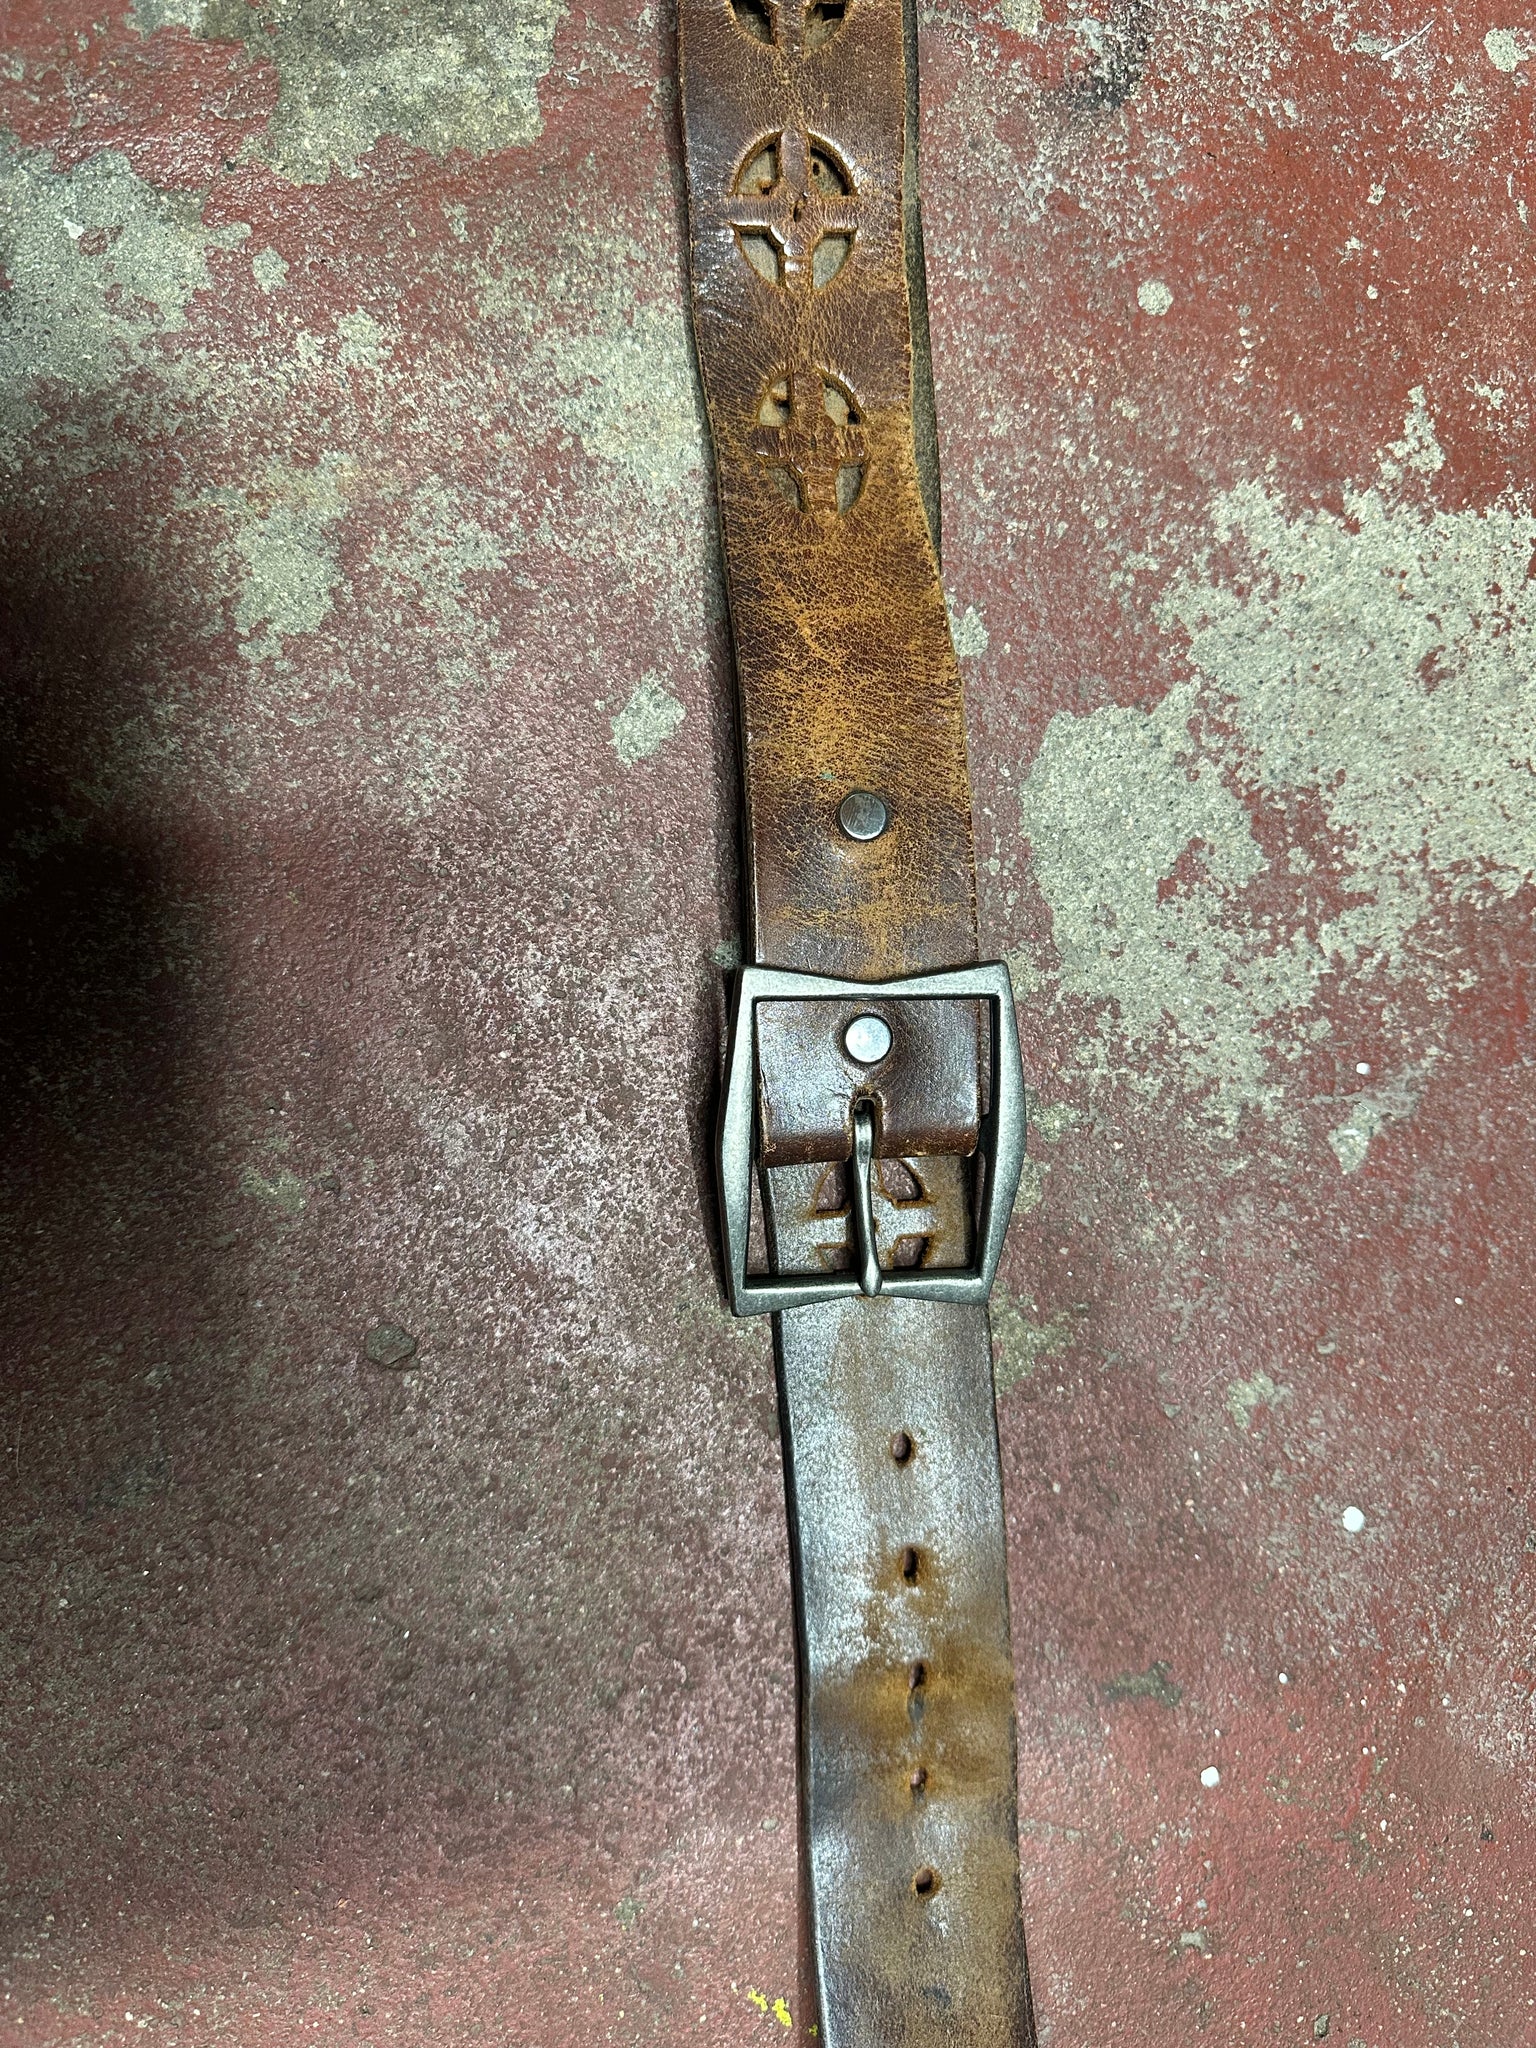 Vintage Brown Leather Cutout Belt (JYJ-220)